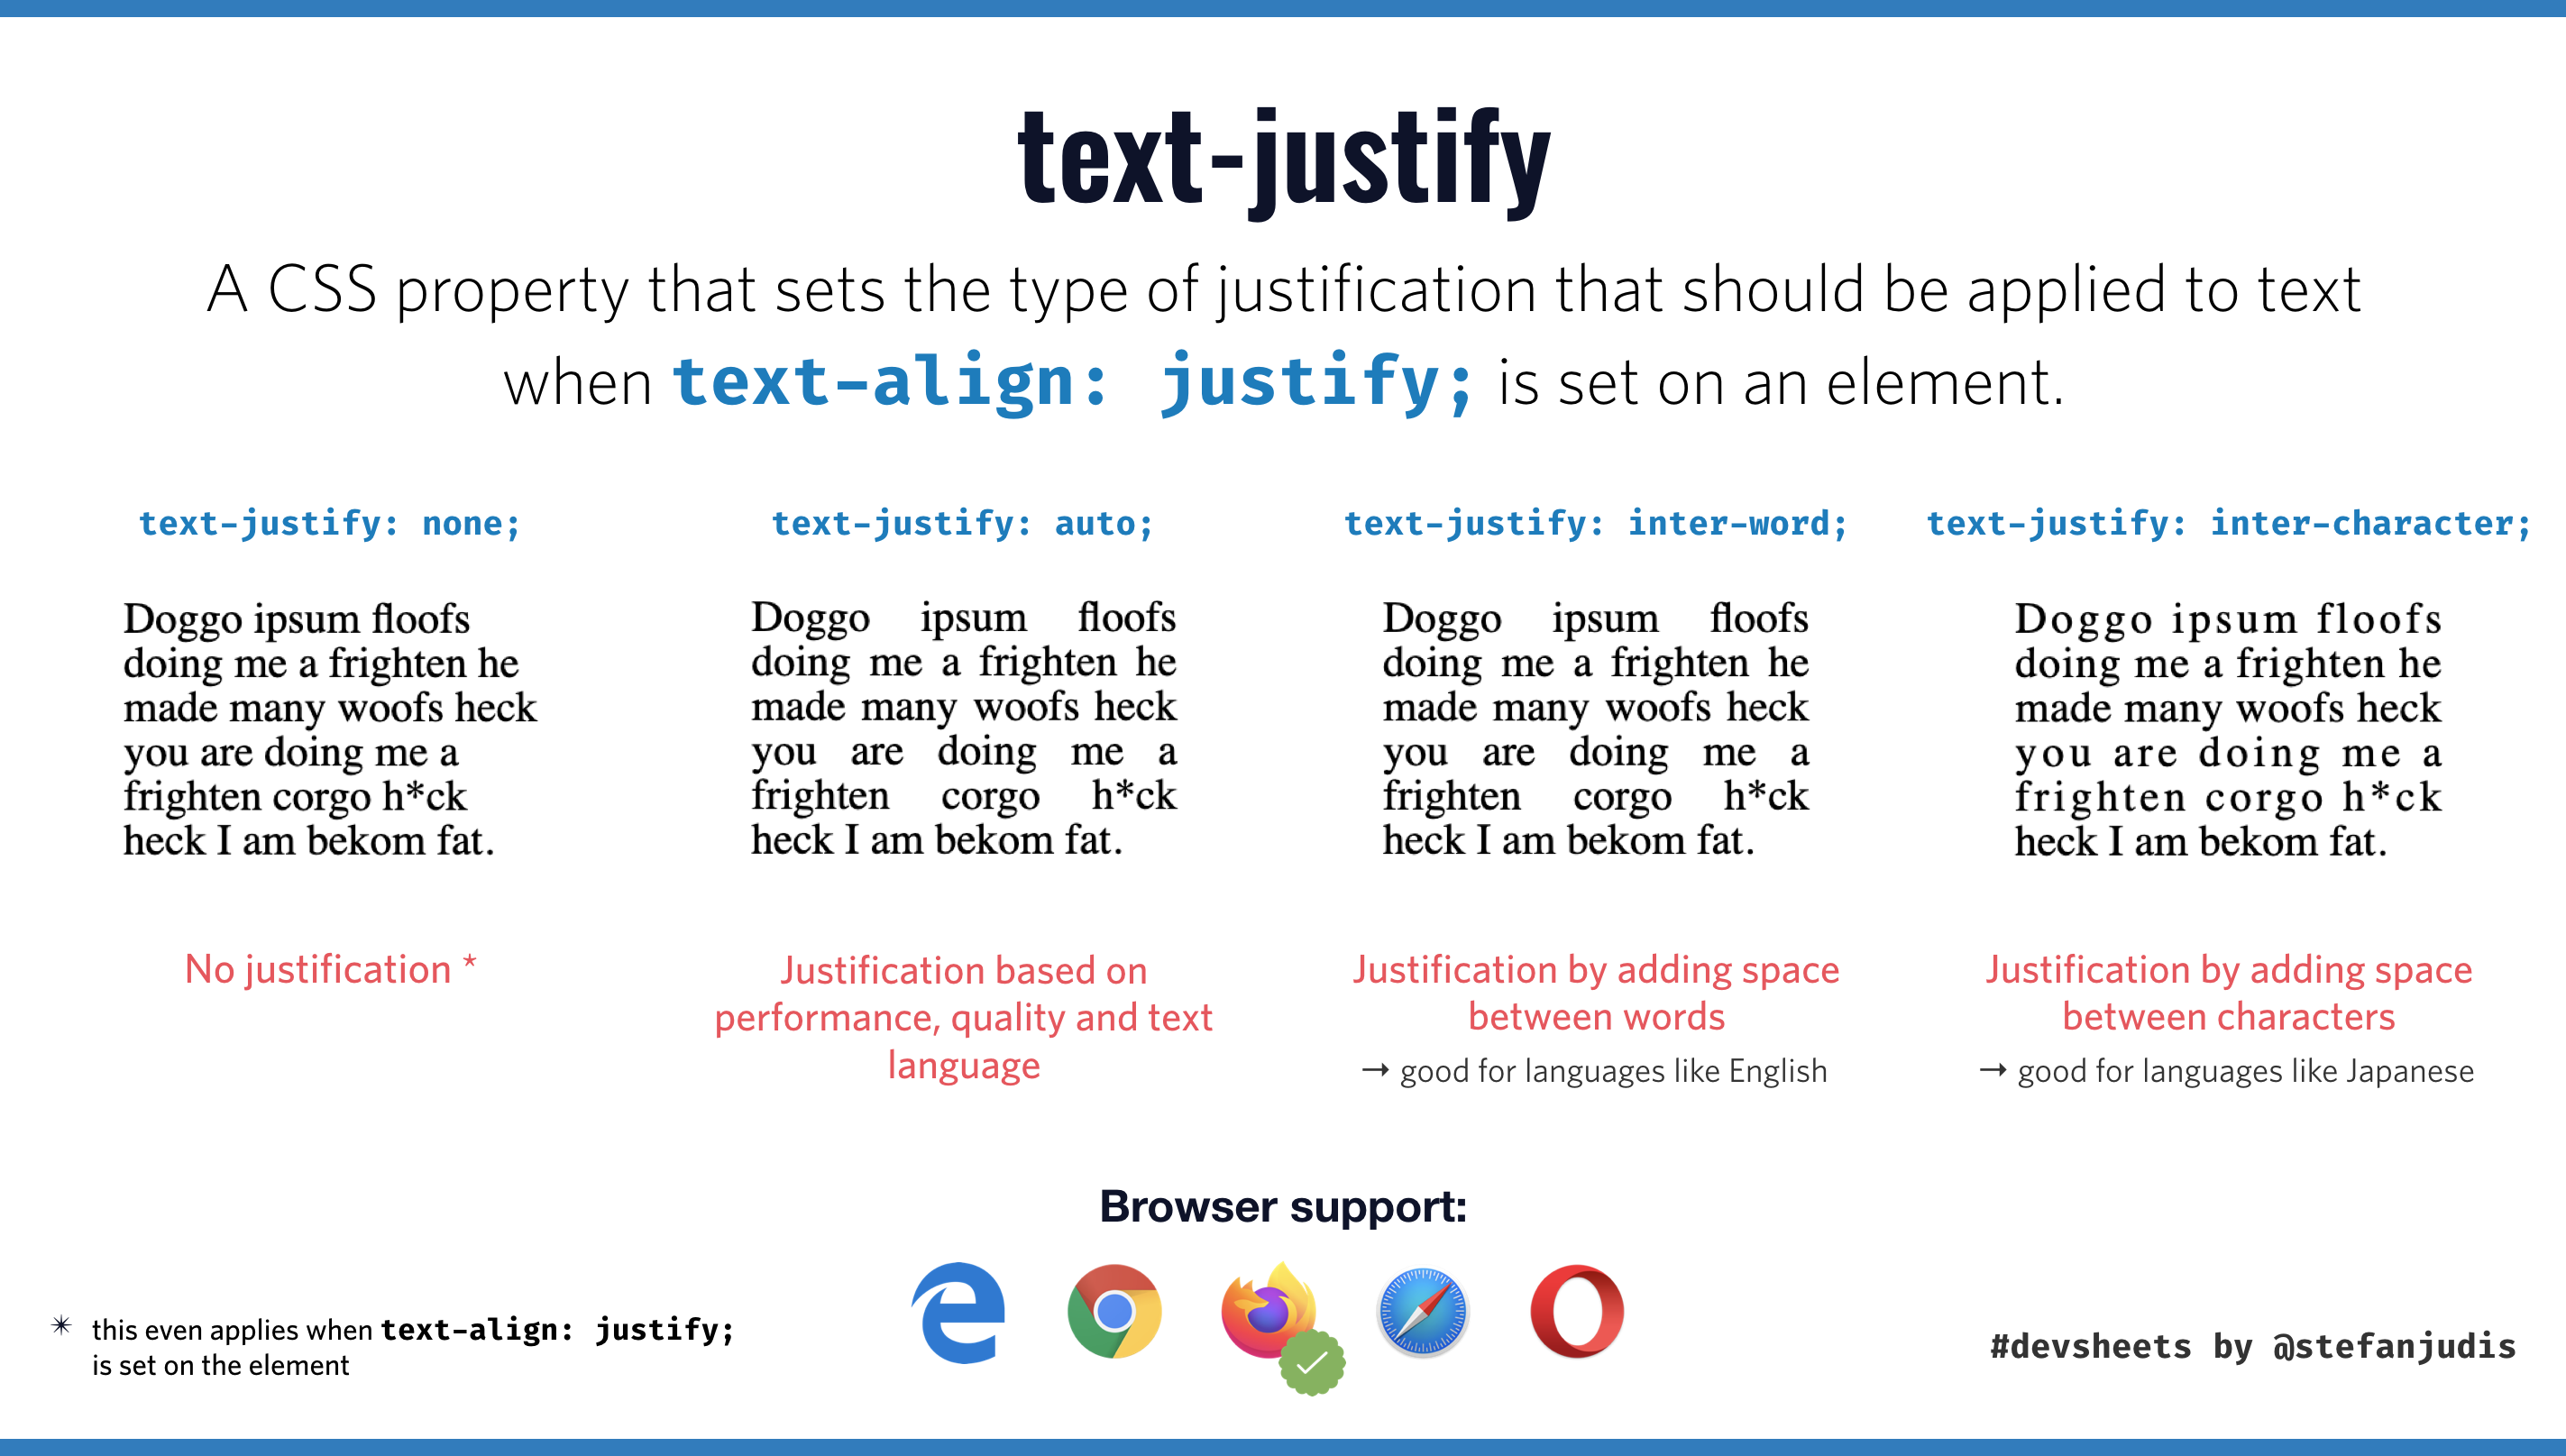 Devsheet explaining the values of text-justify